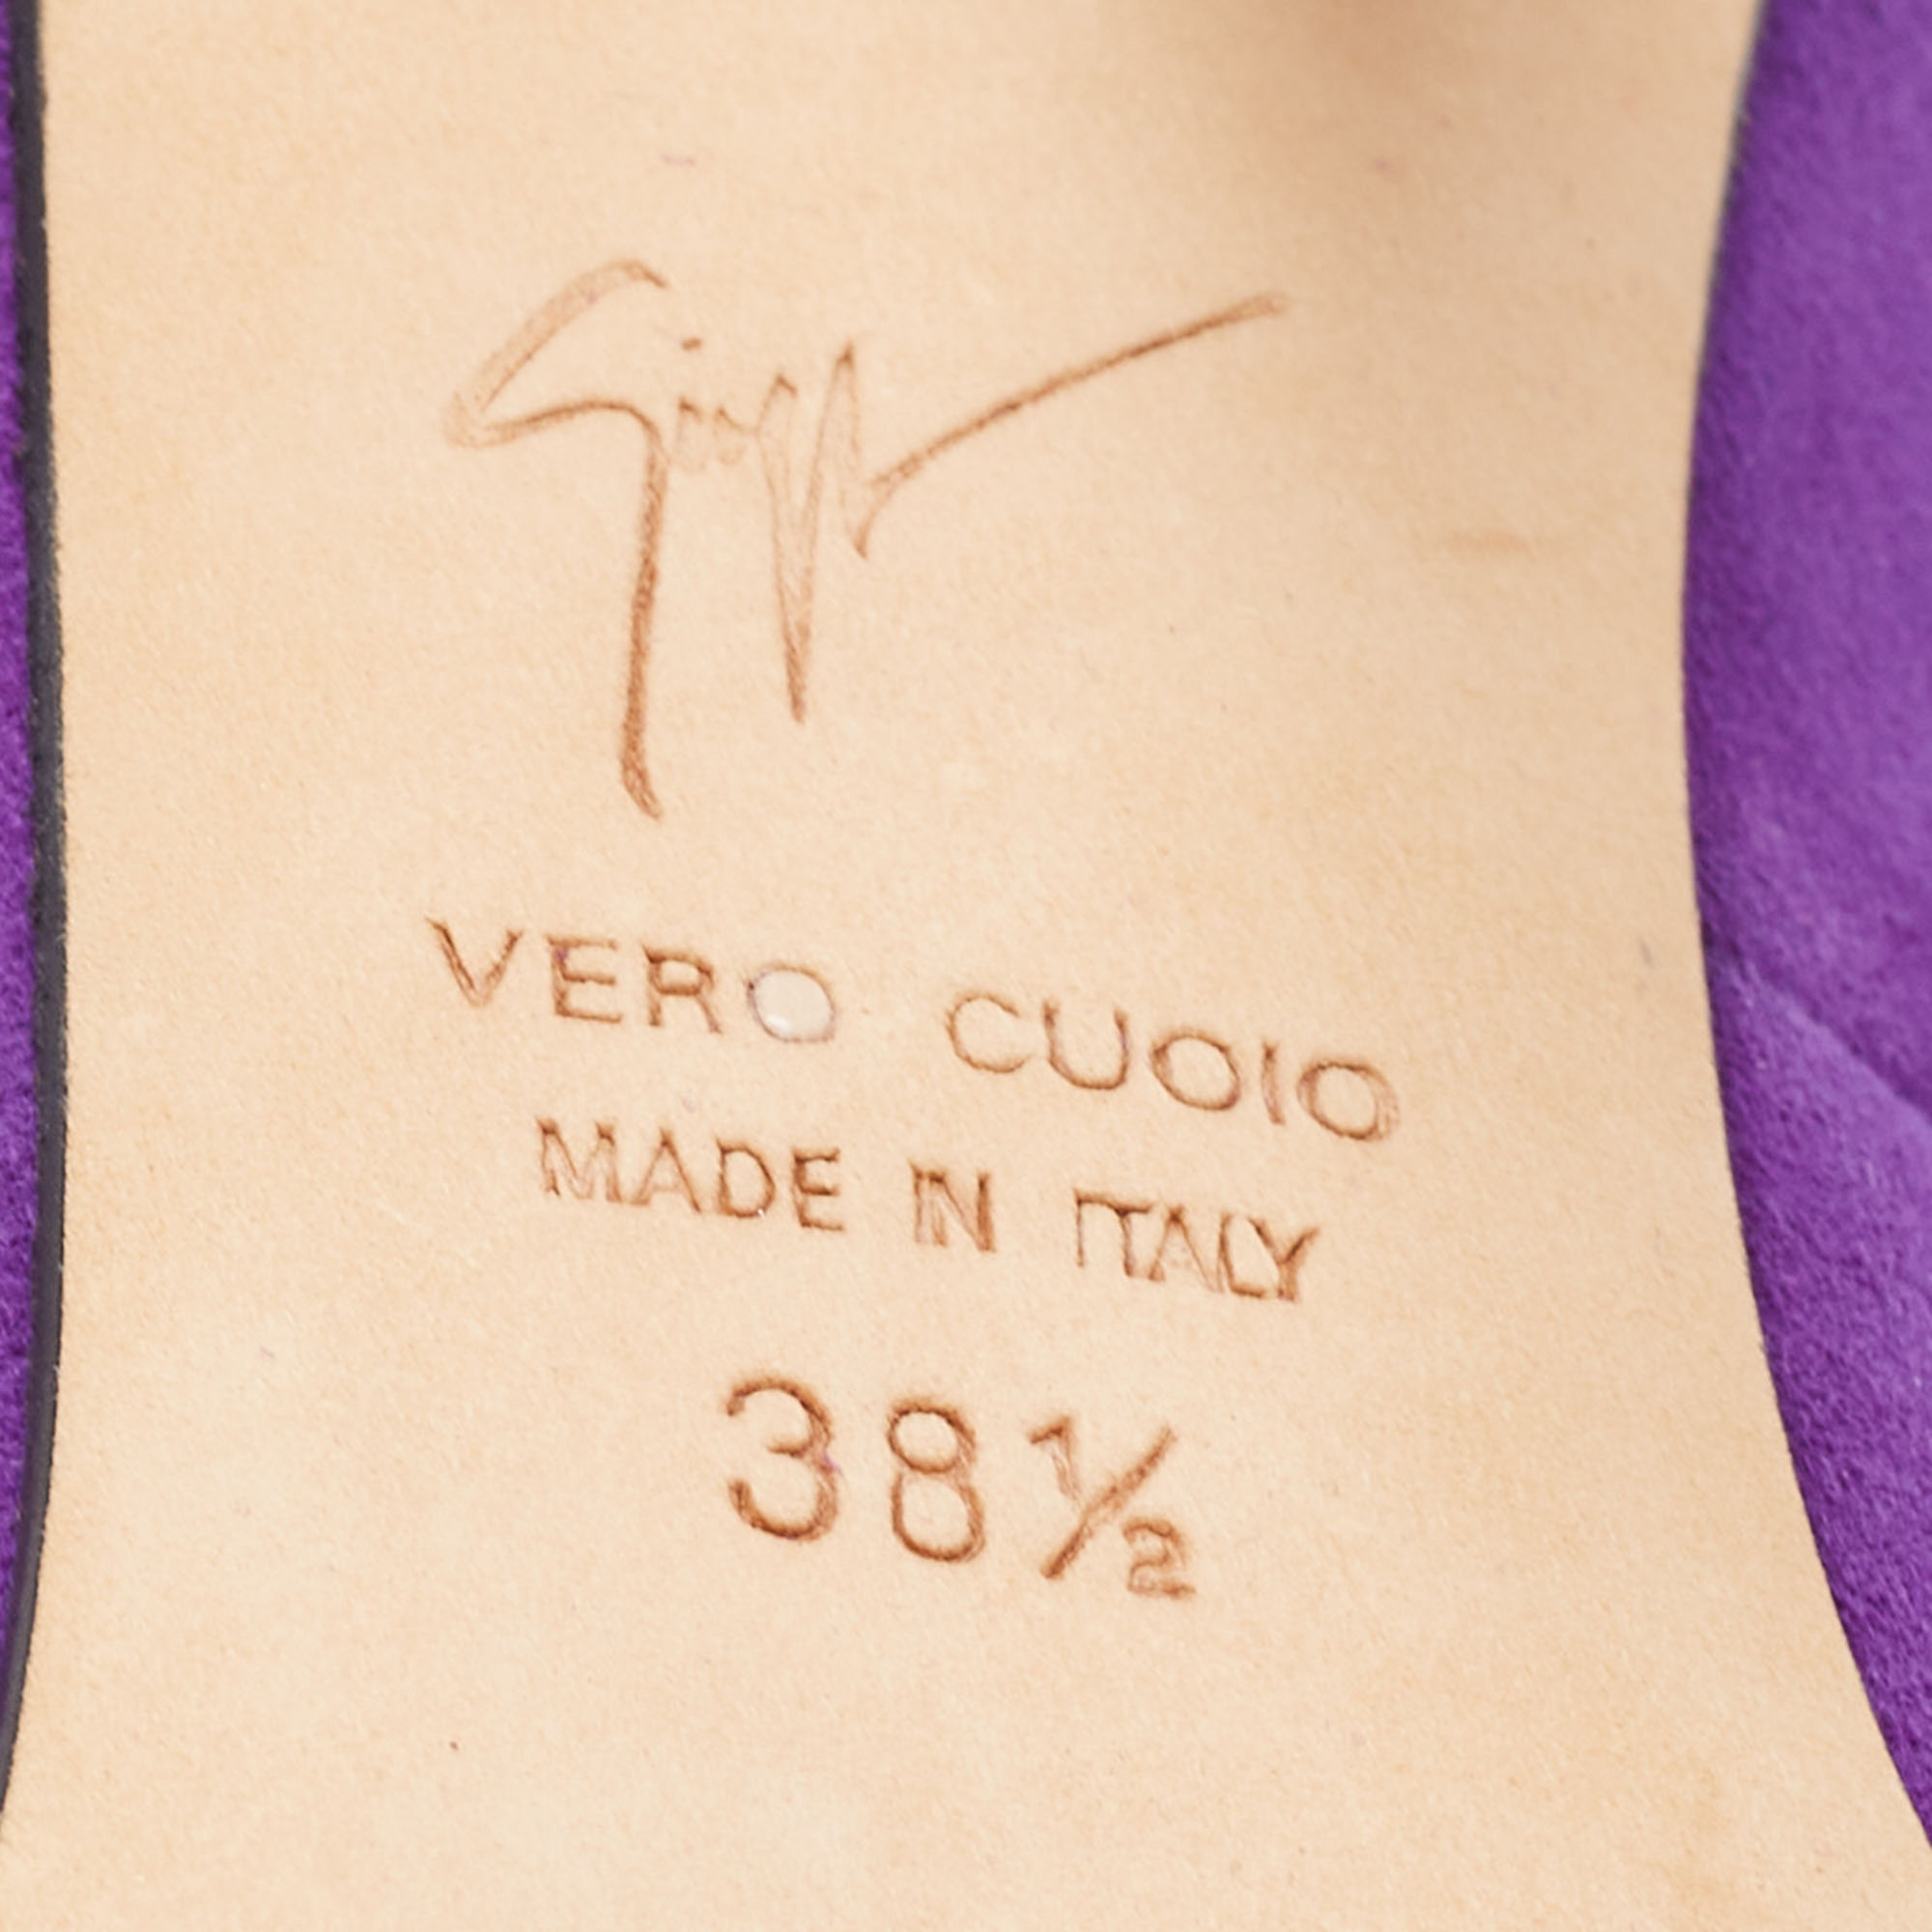 Giuseppe Zanotti Purple Suede Pointed Toe Pumps Size 38.5